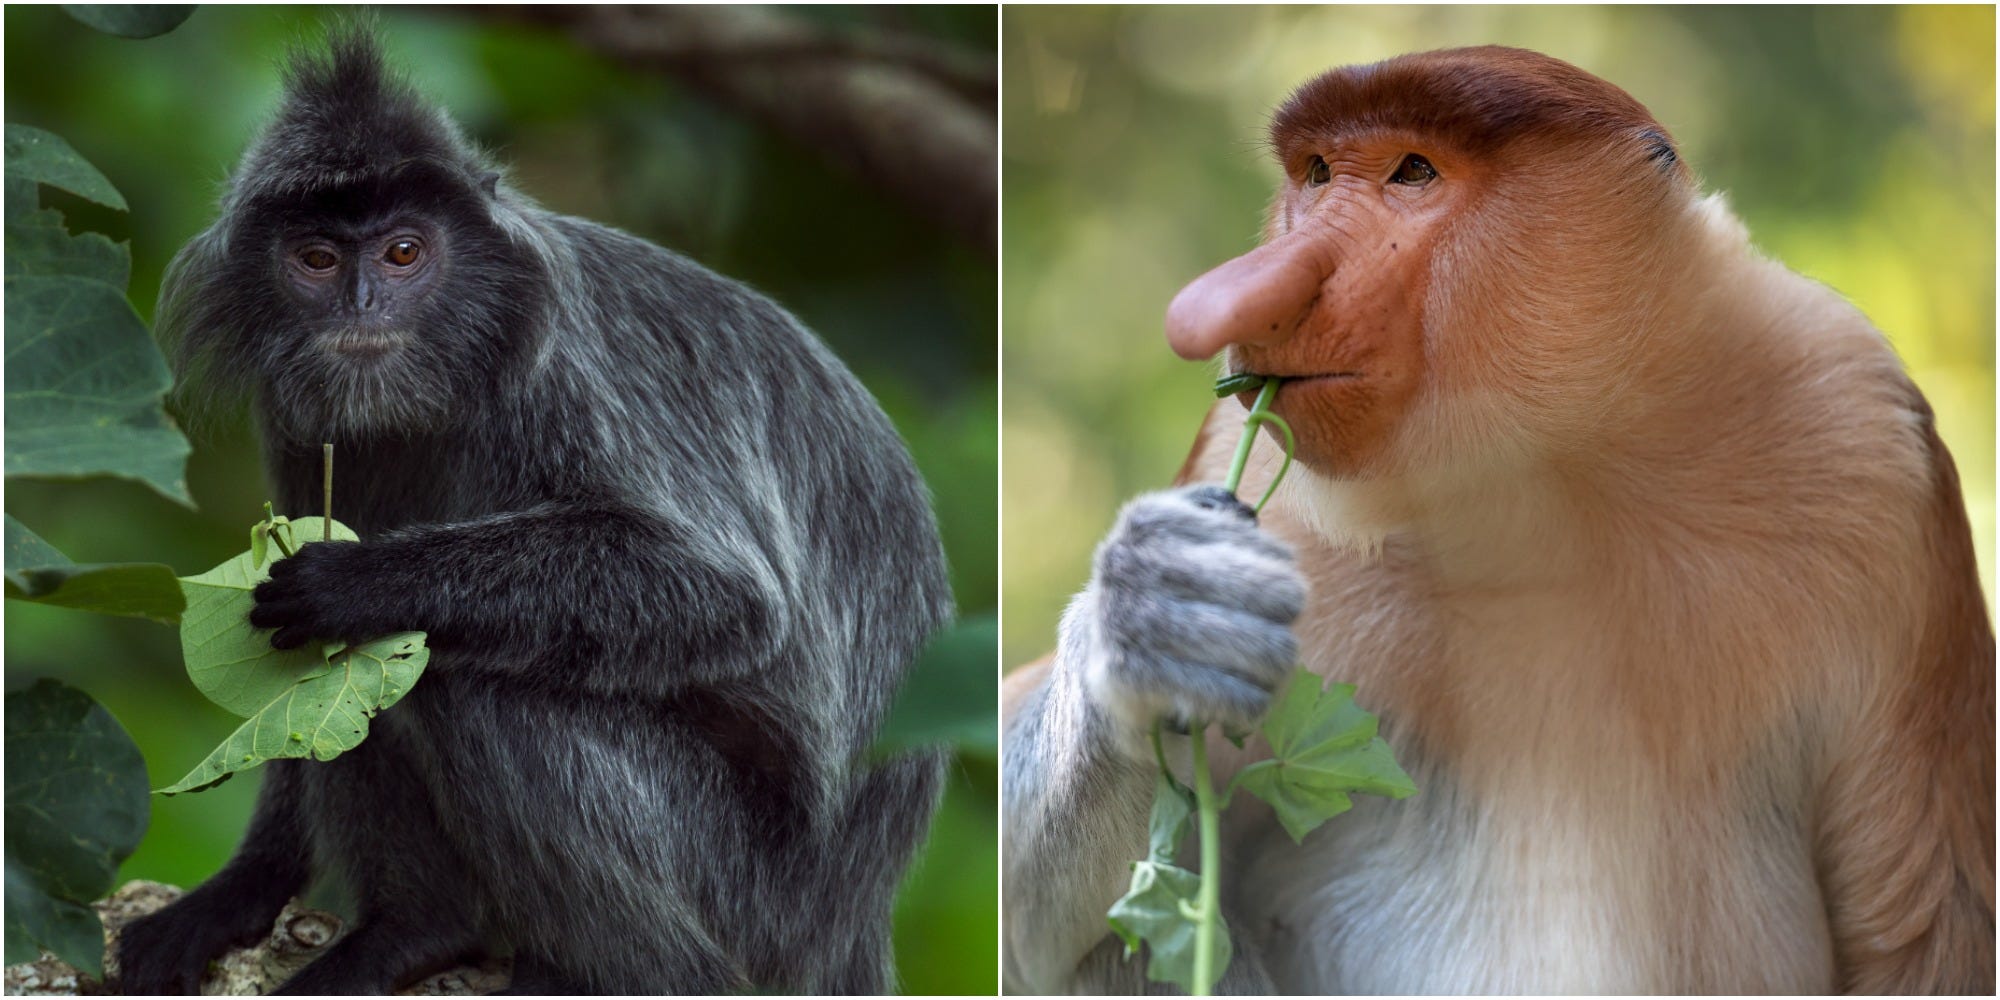 Is the world's most popular lab monkey vanishing—or flourishing